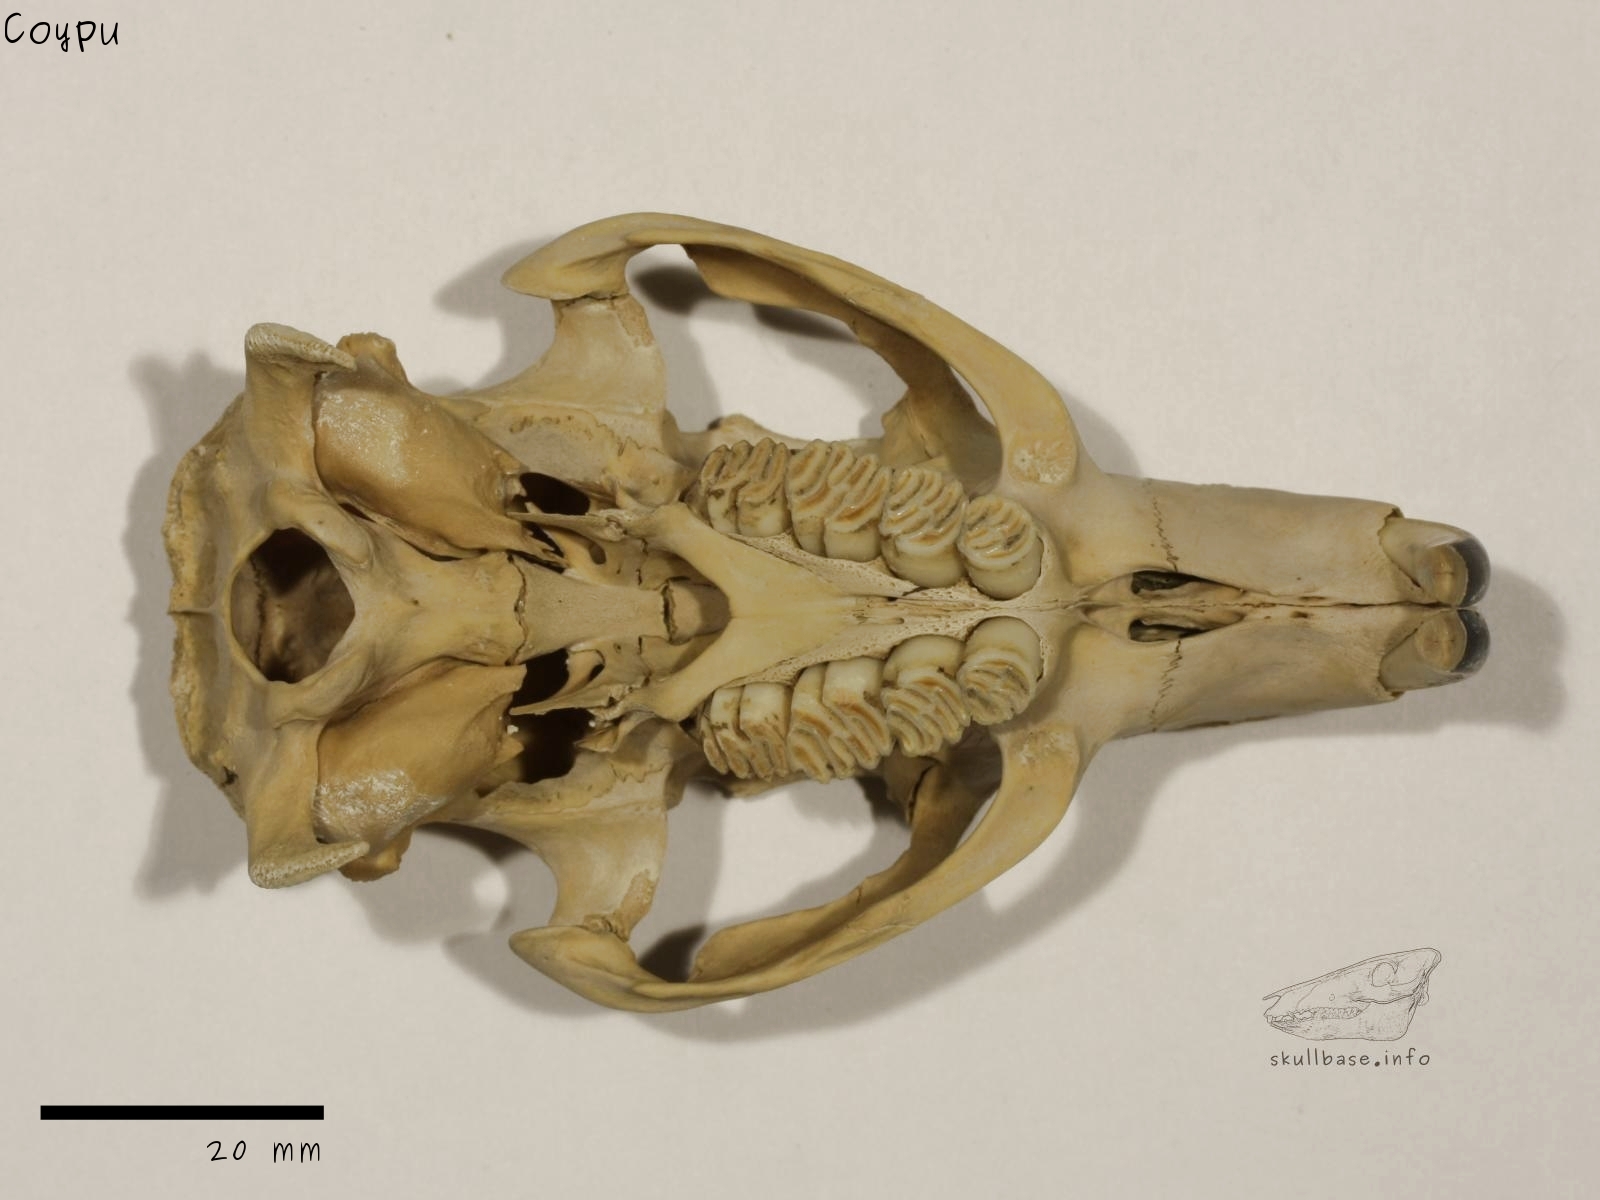 Coypu (Myocastor coypus) skull ventral view